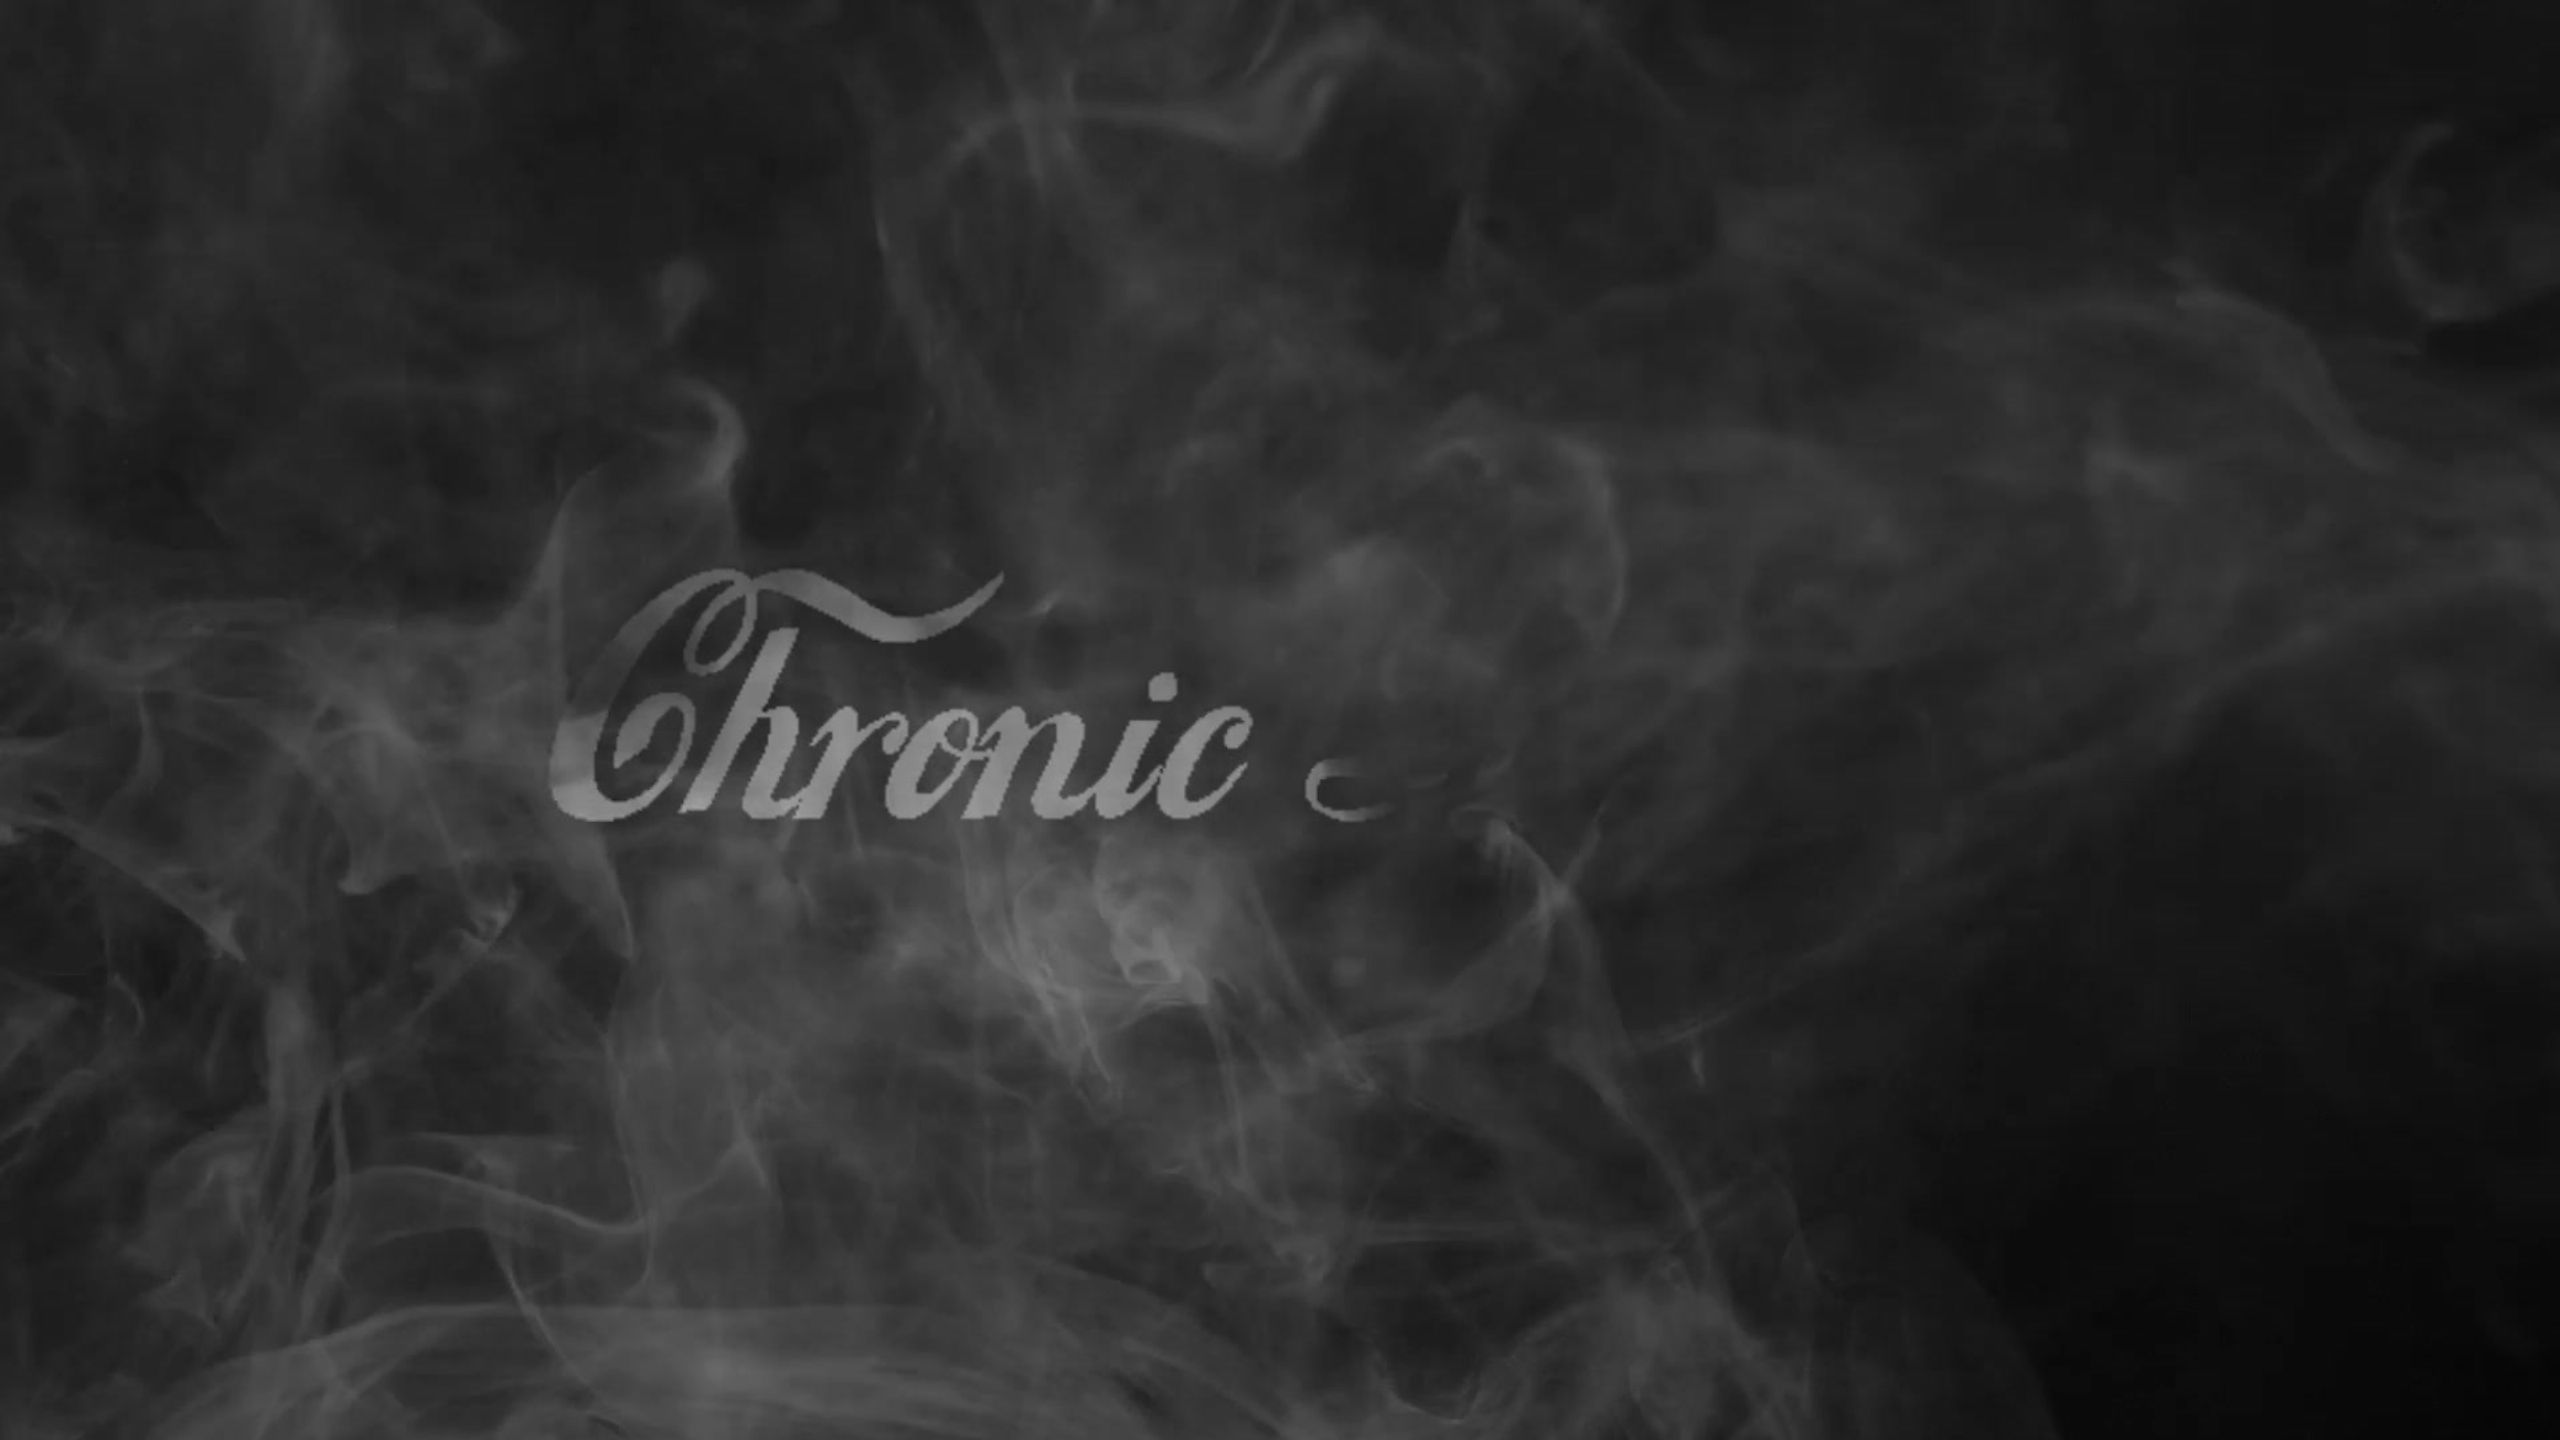 Chronic Lounge Smoke Logo Reveal